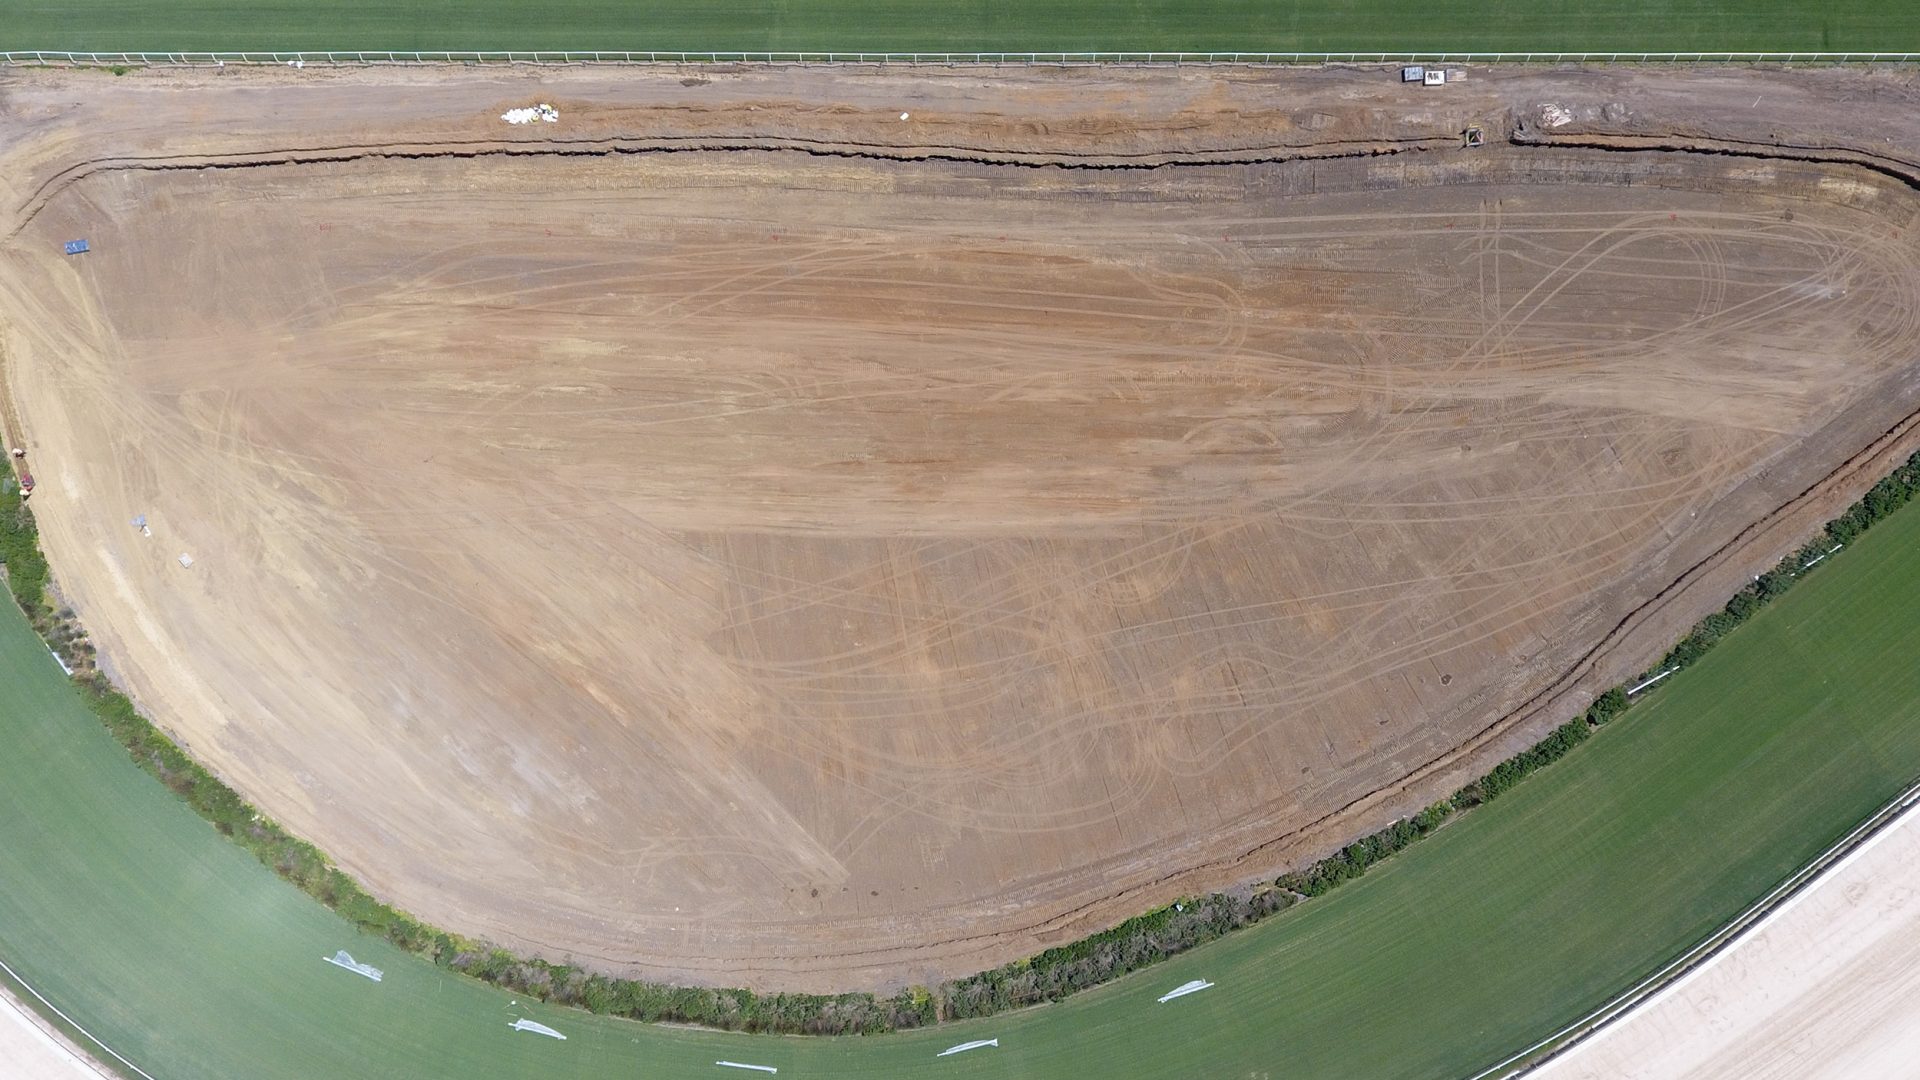 Del Mar Fairgrounds treatment wetland aerial – before